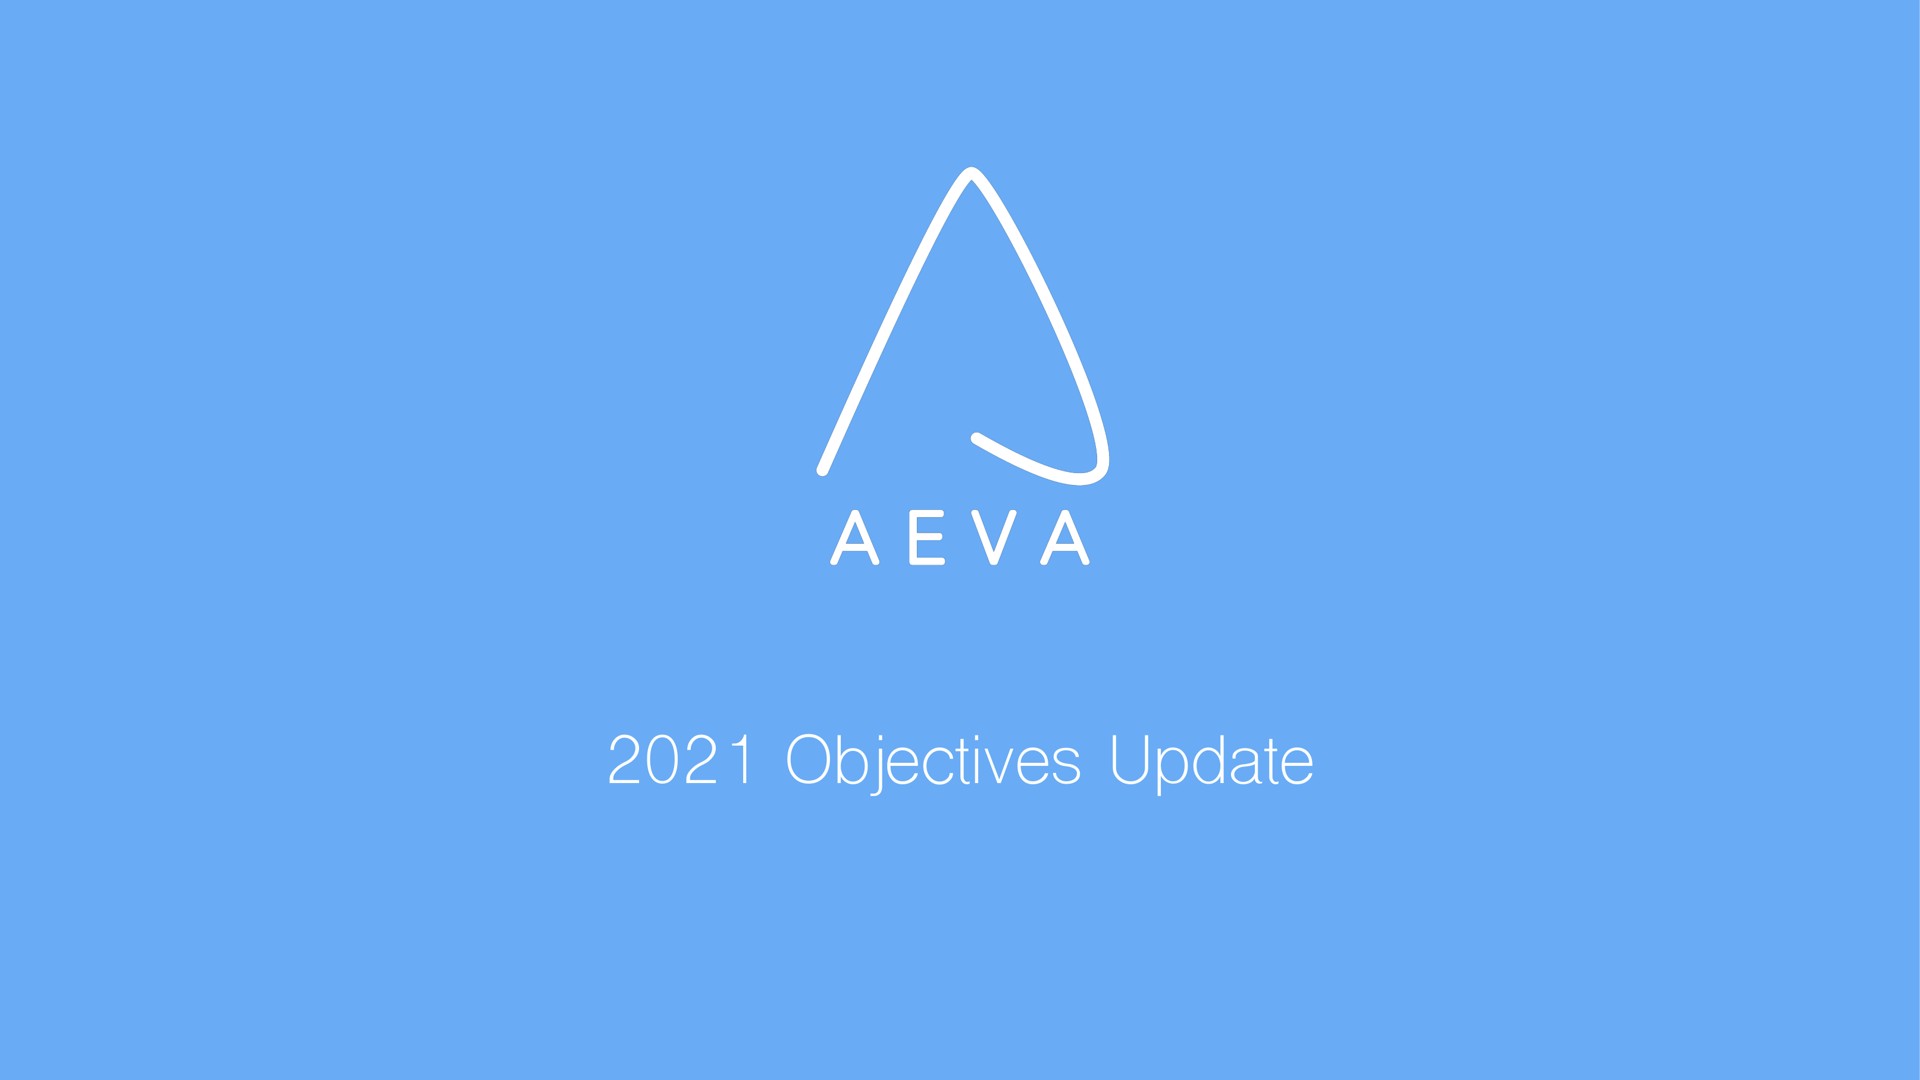 objectives update nea | Aeva